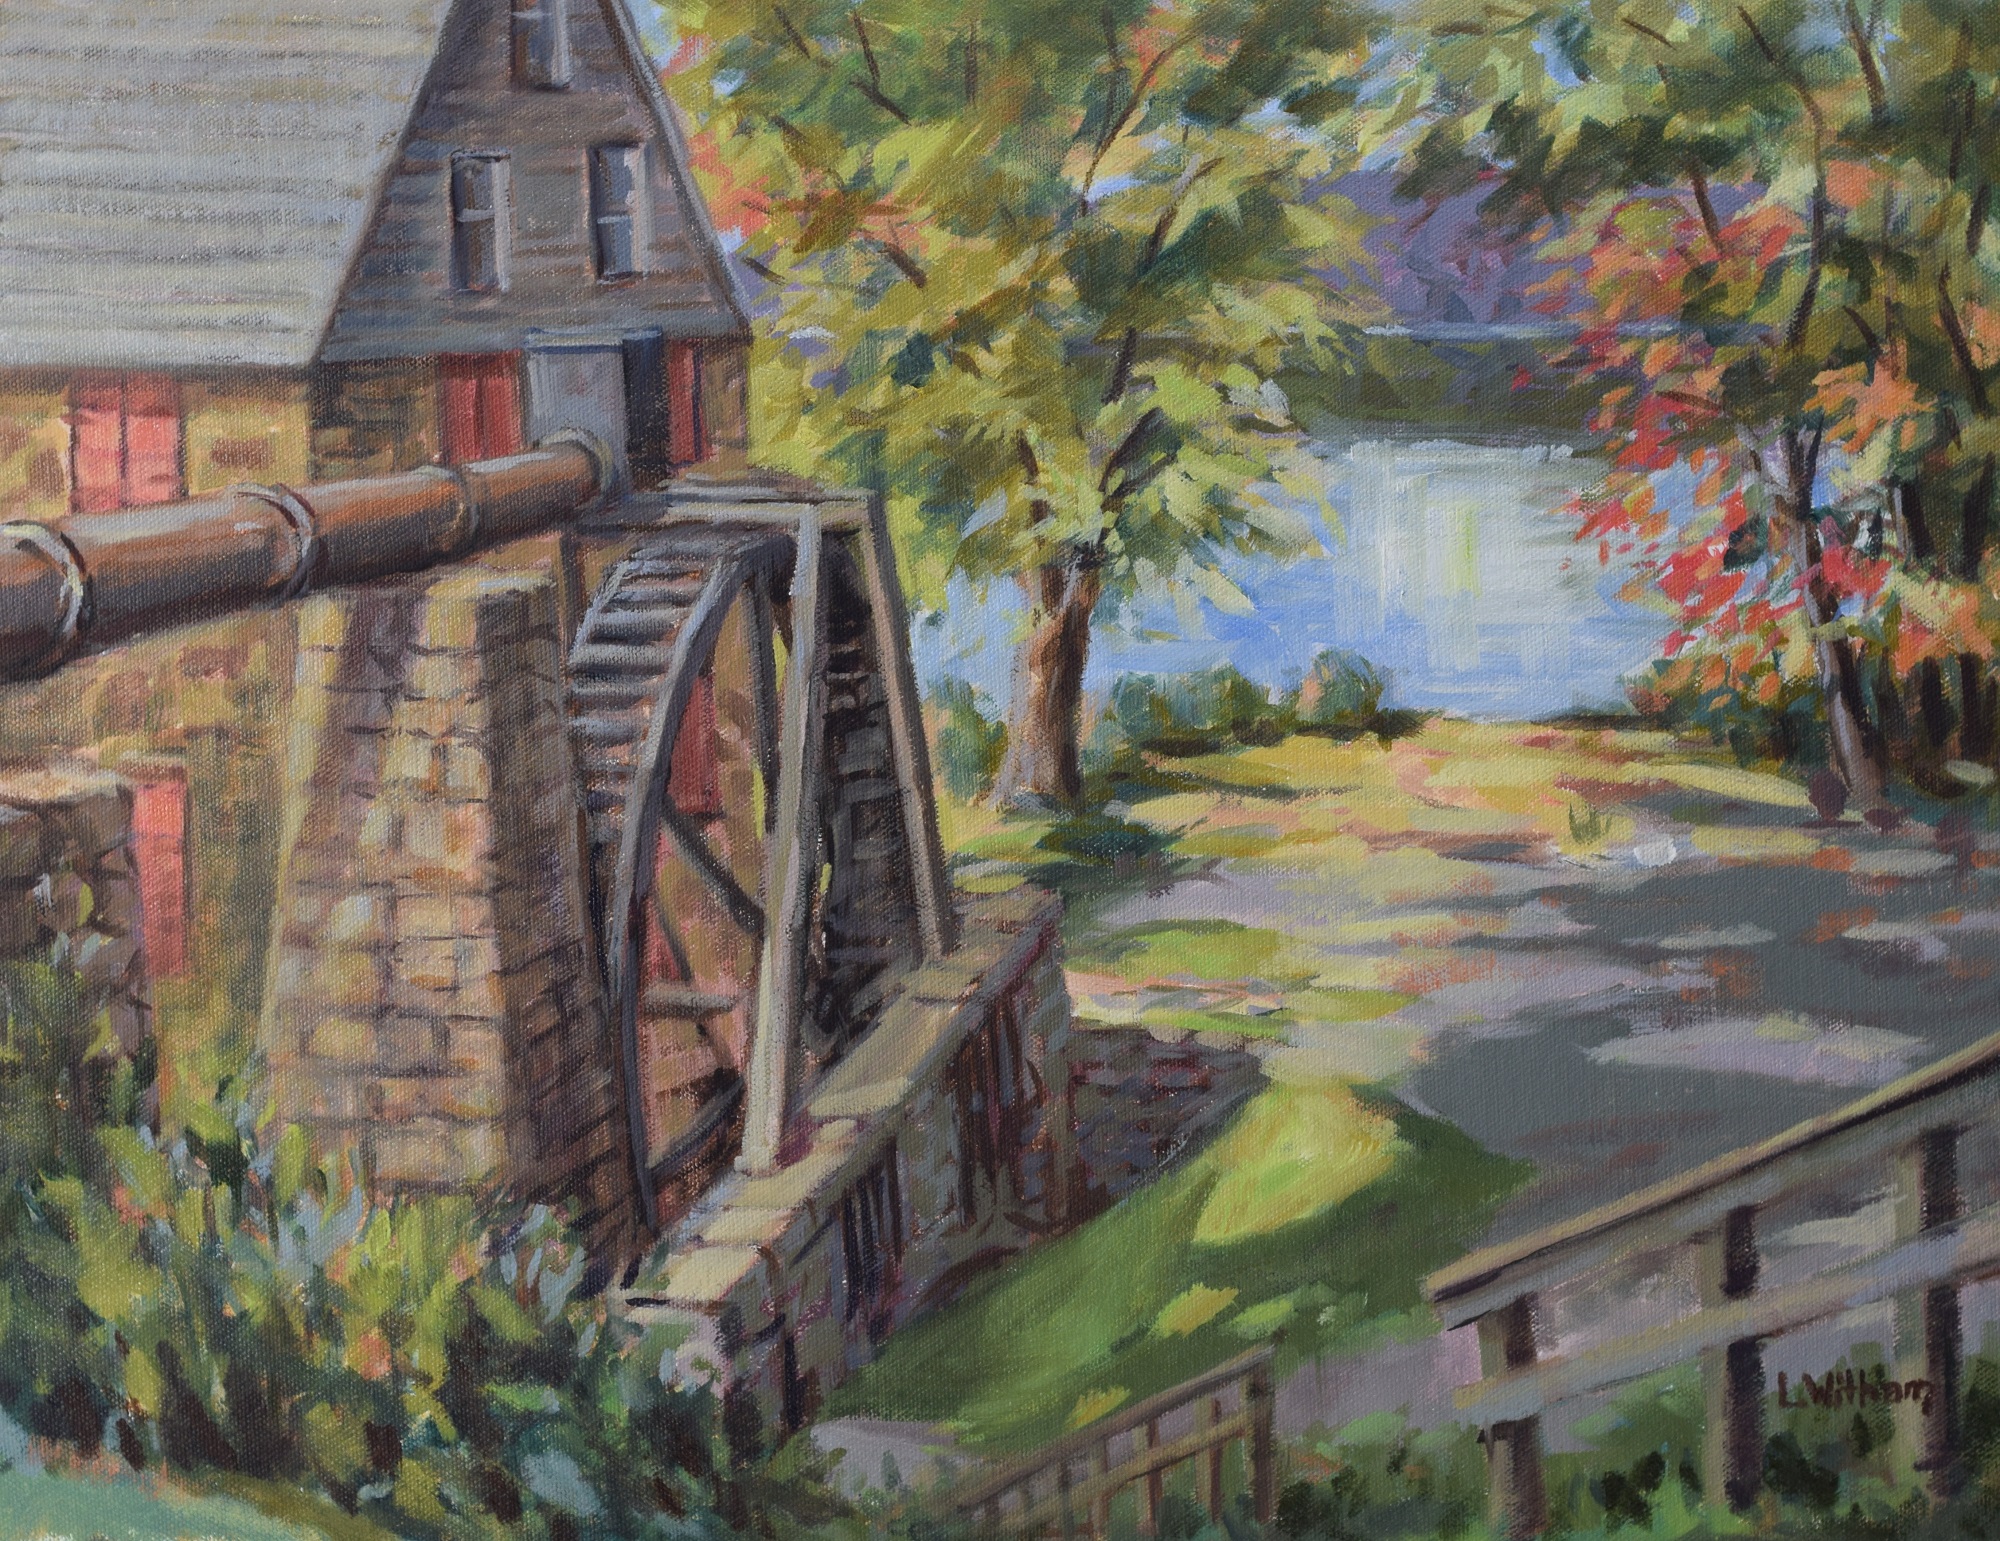 Susquehanna Mill, Oil on canvas, 14x18